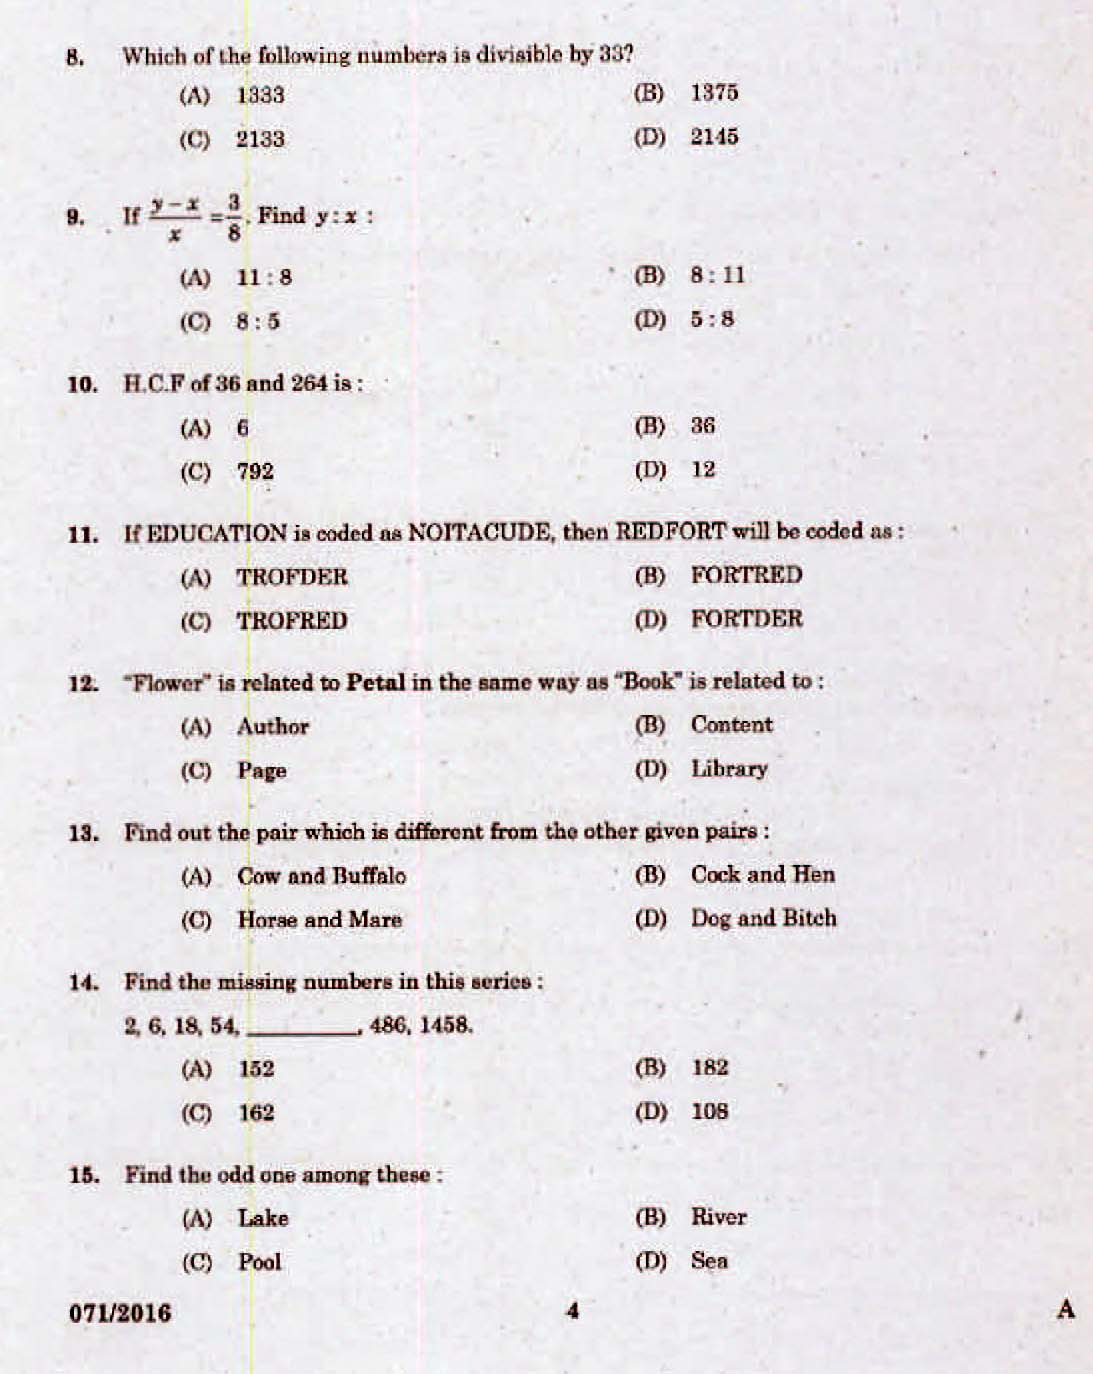 Kerala PSC Assistant Universities of Kerala Exam 2016 Question Paper Code 0712016 2